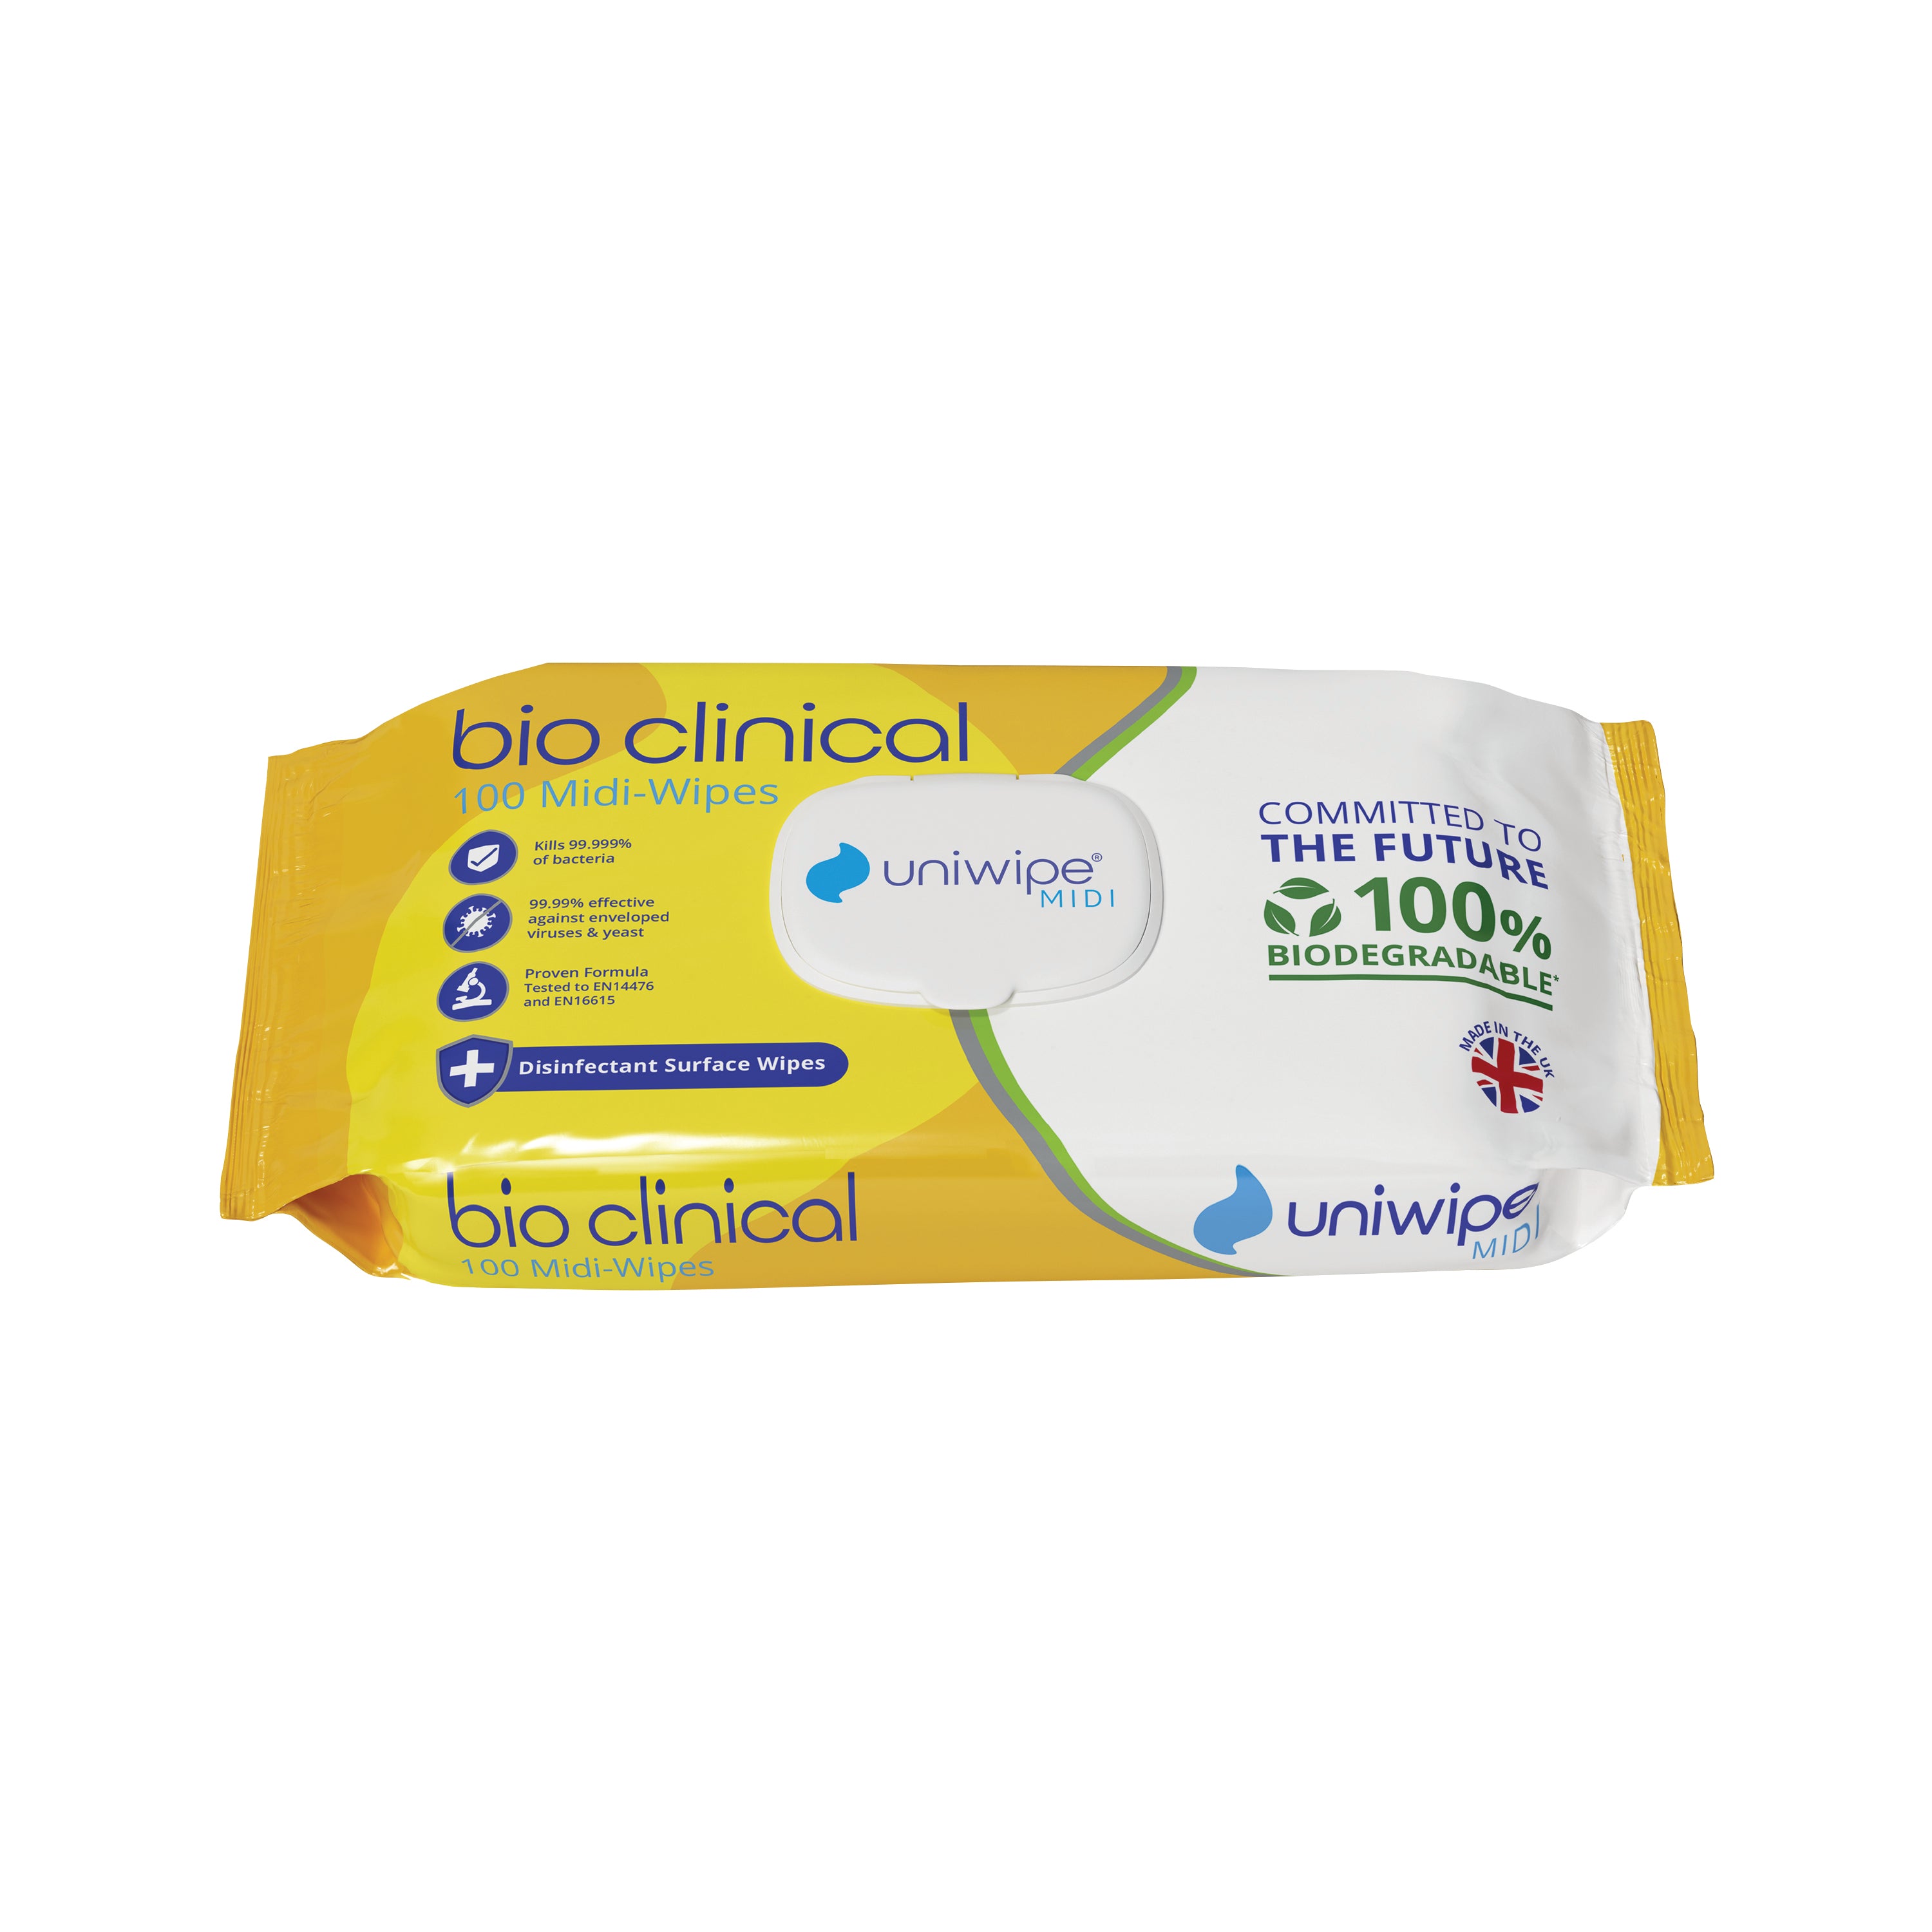 Uniwipe Bio Clinical Midi Wipes Biodegradable Wipes (Pack of 100) 1081